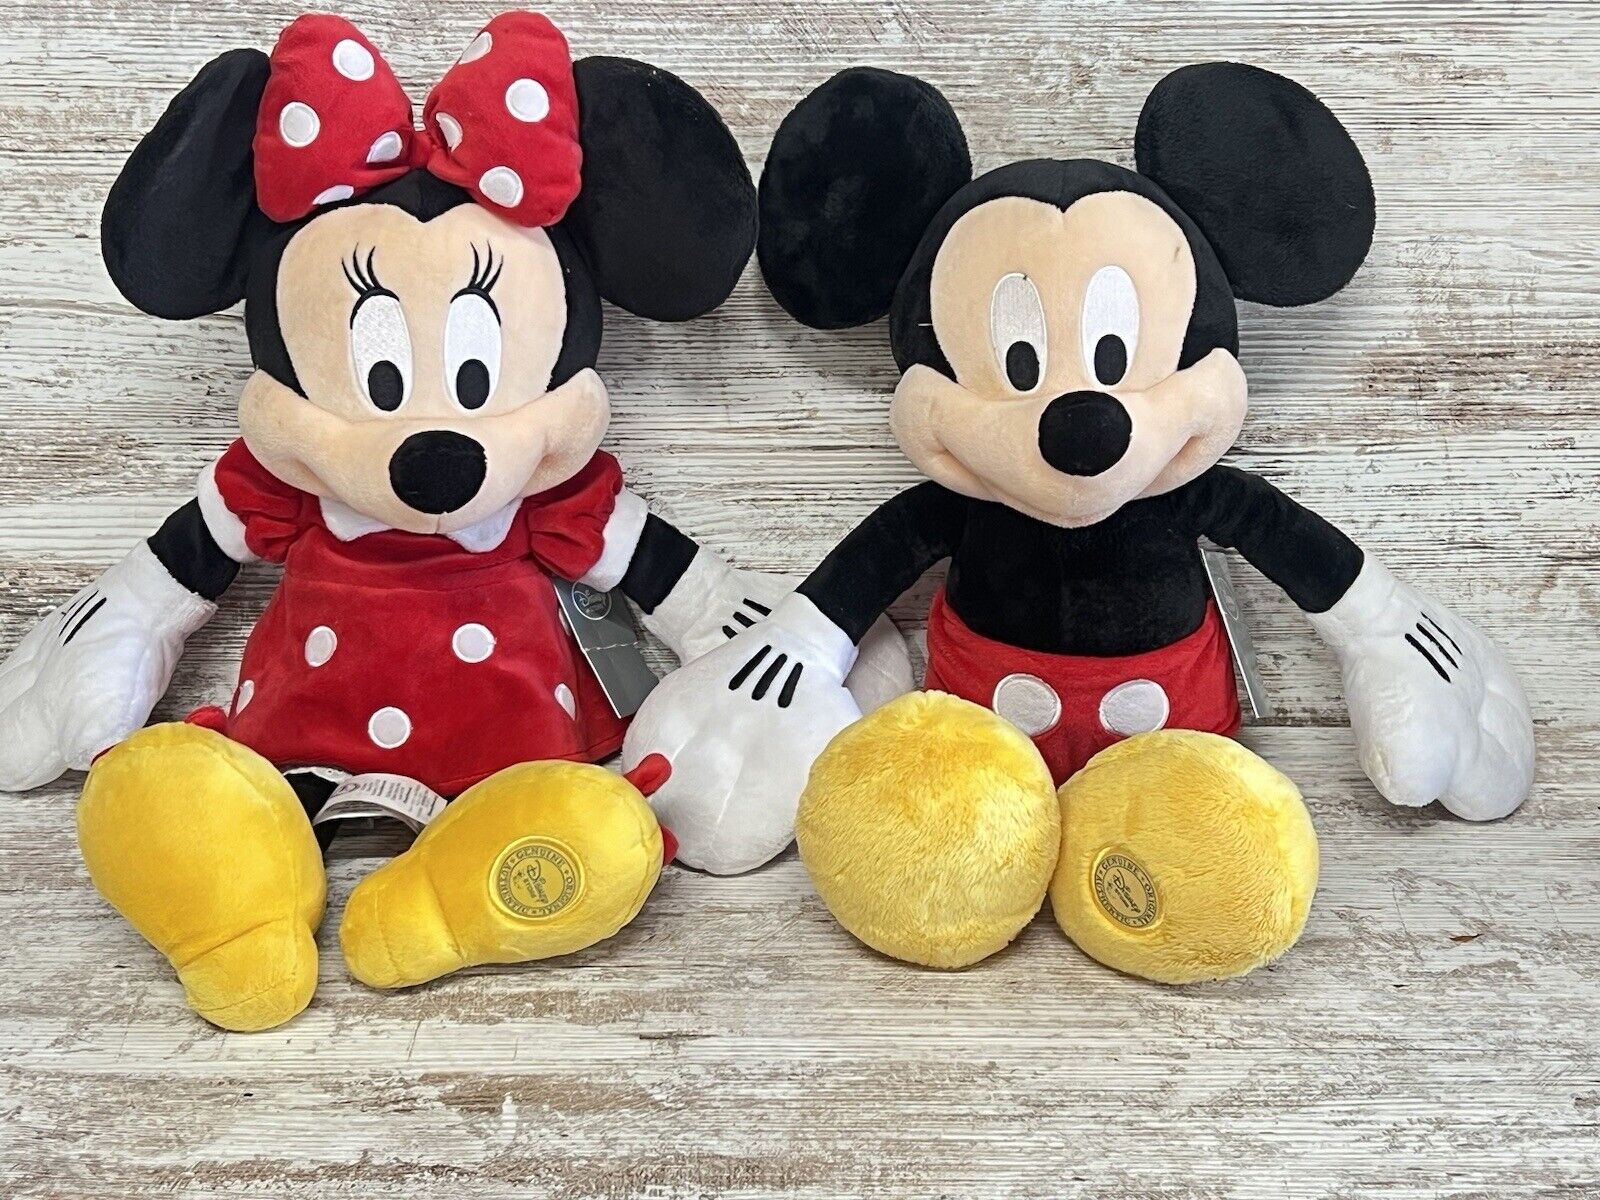 Disney Store Mickey Minnie Mouse Plush Soft Toy Stuffed